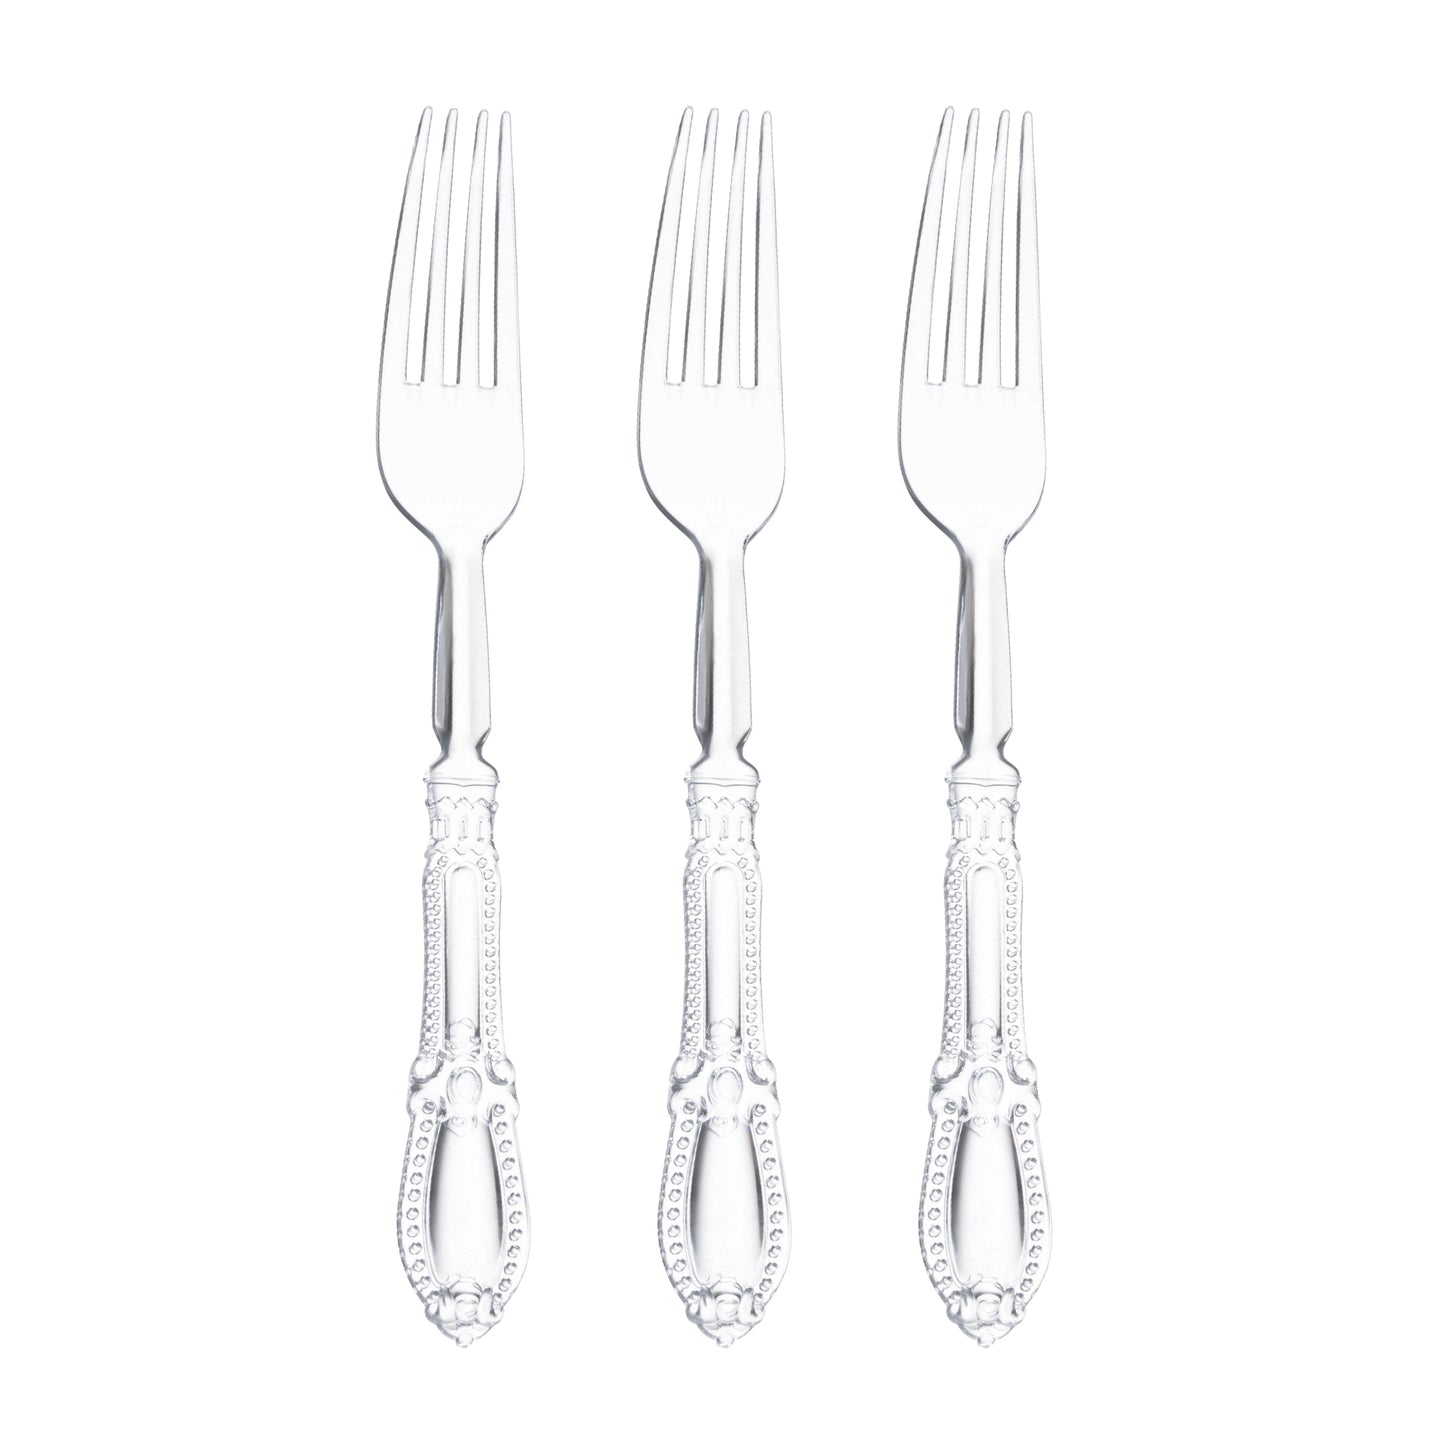 Clear Baroque Plastic Dinner Forks